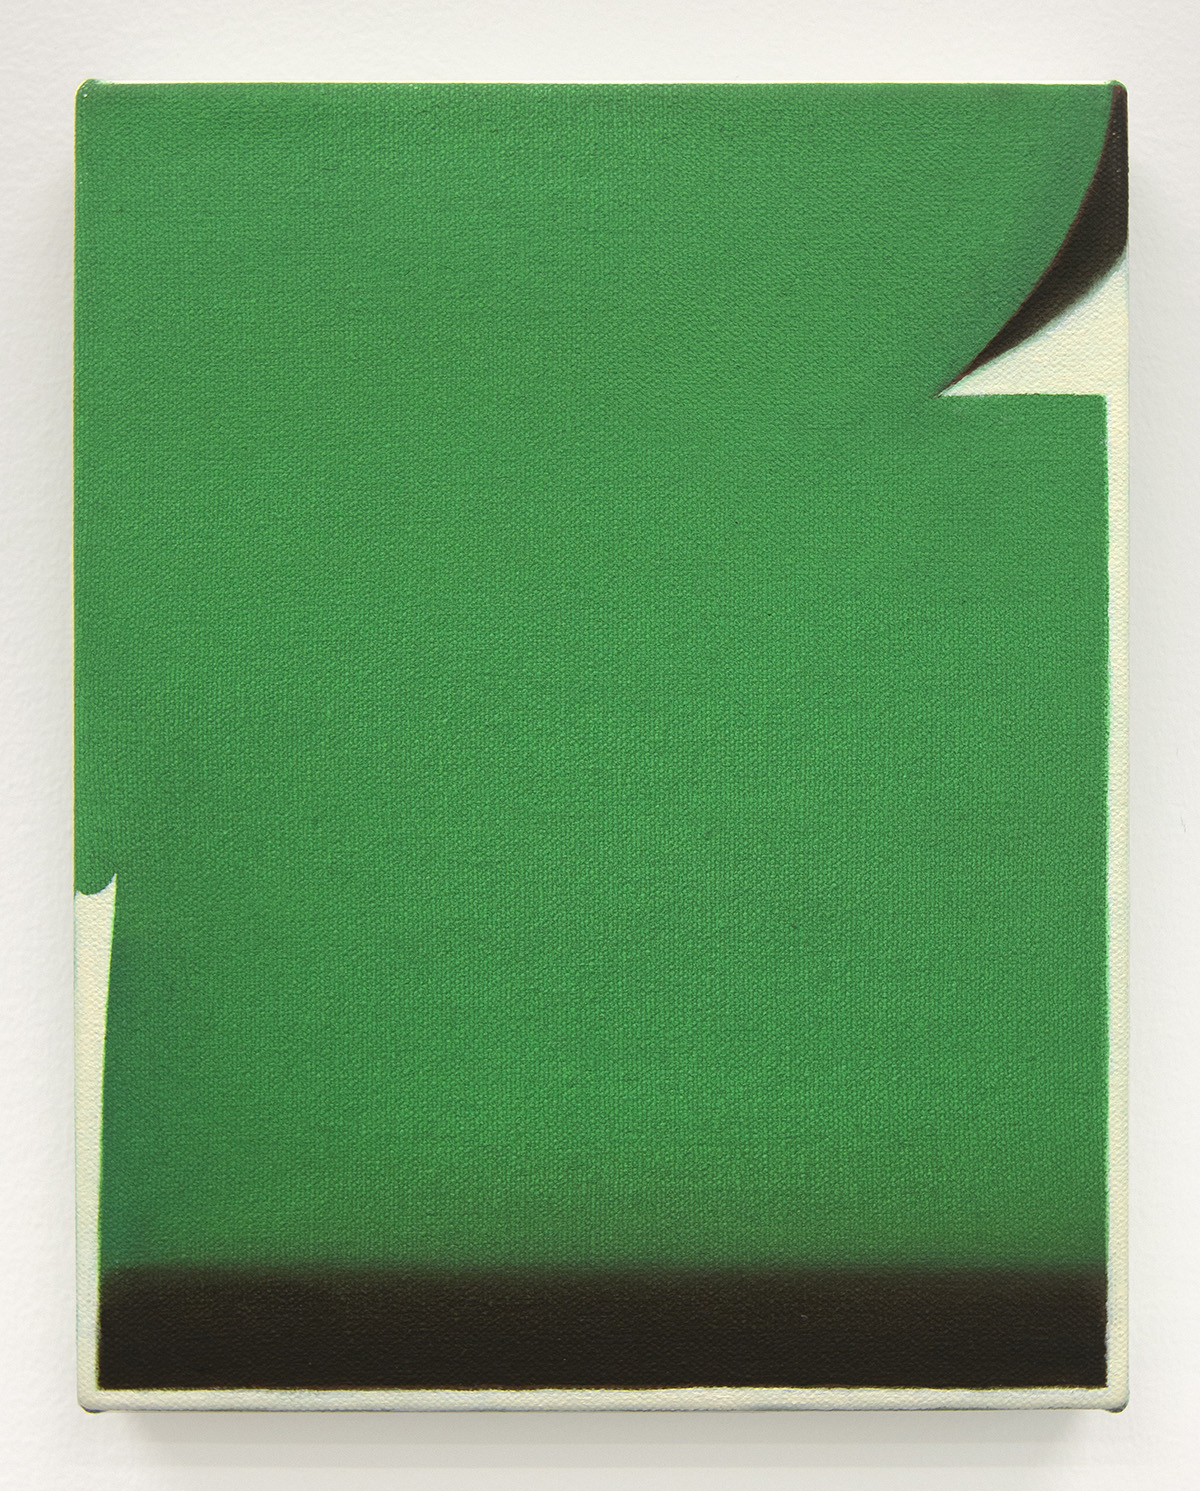 Shi Jiayun, Green #1, 2018, oil on canvas, 25.4 x 20.3 cm, 10 x 8 in.